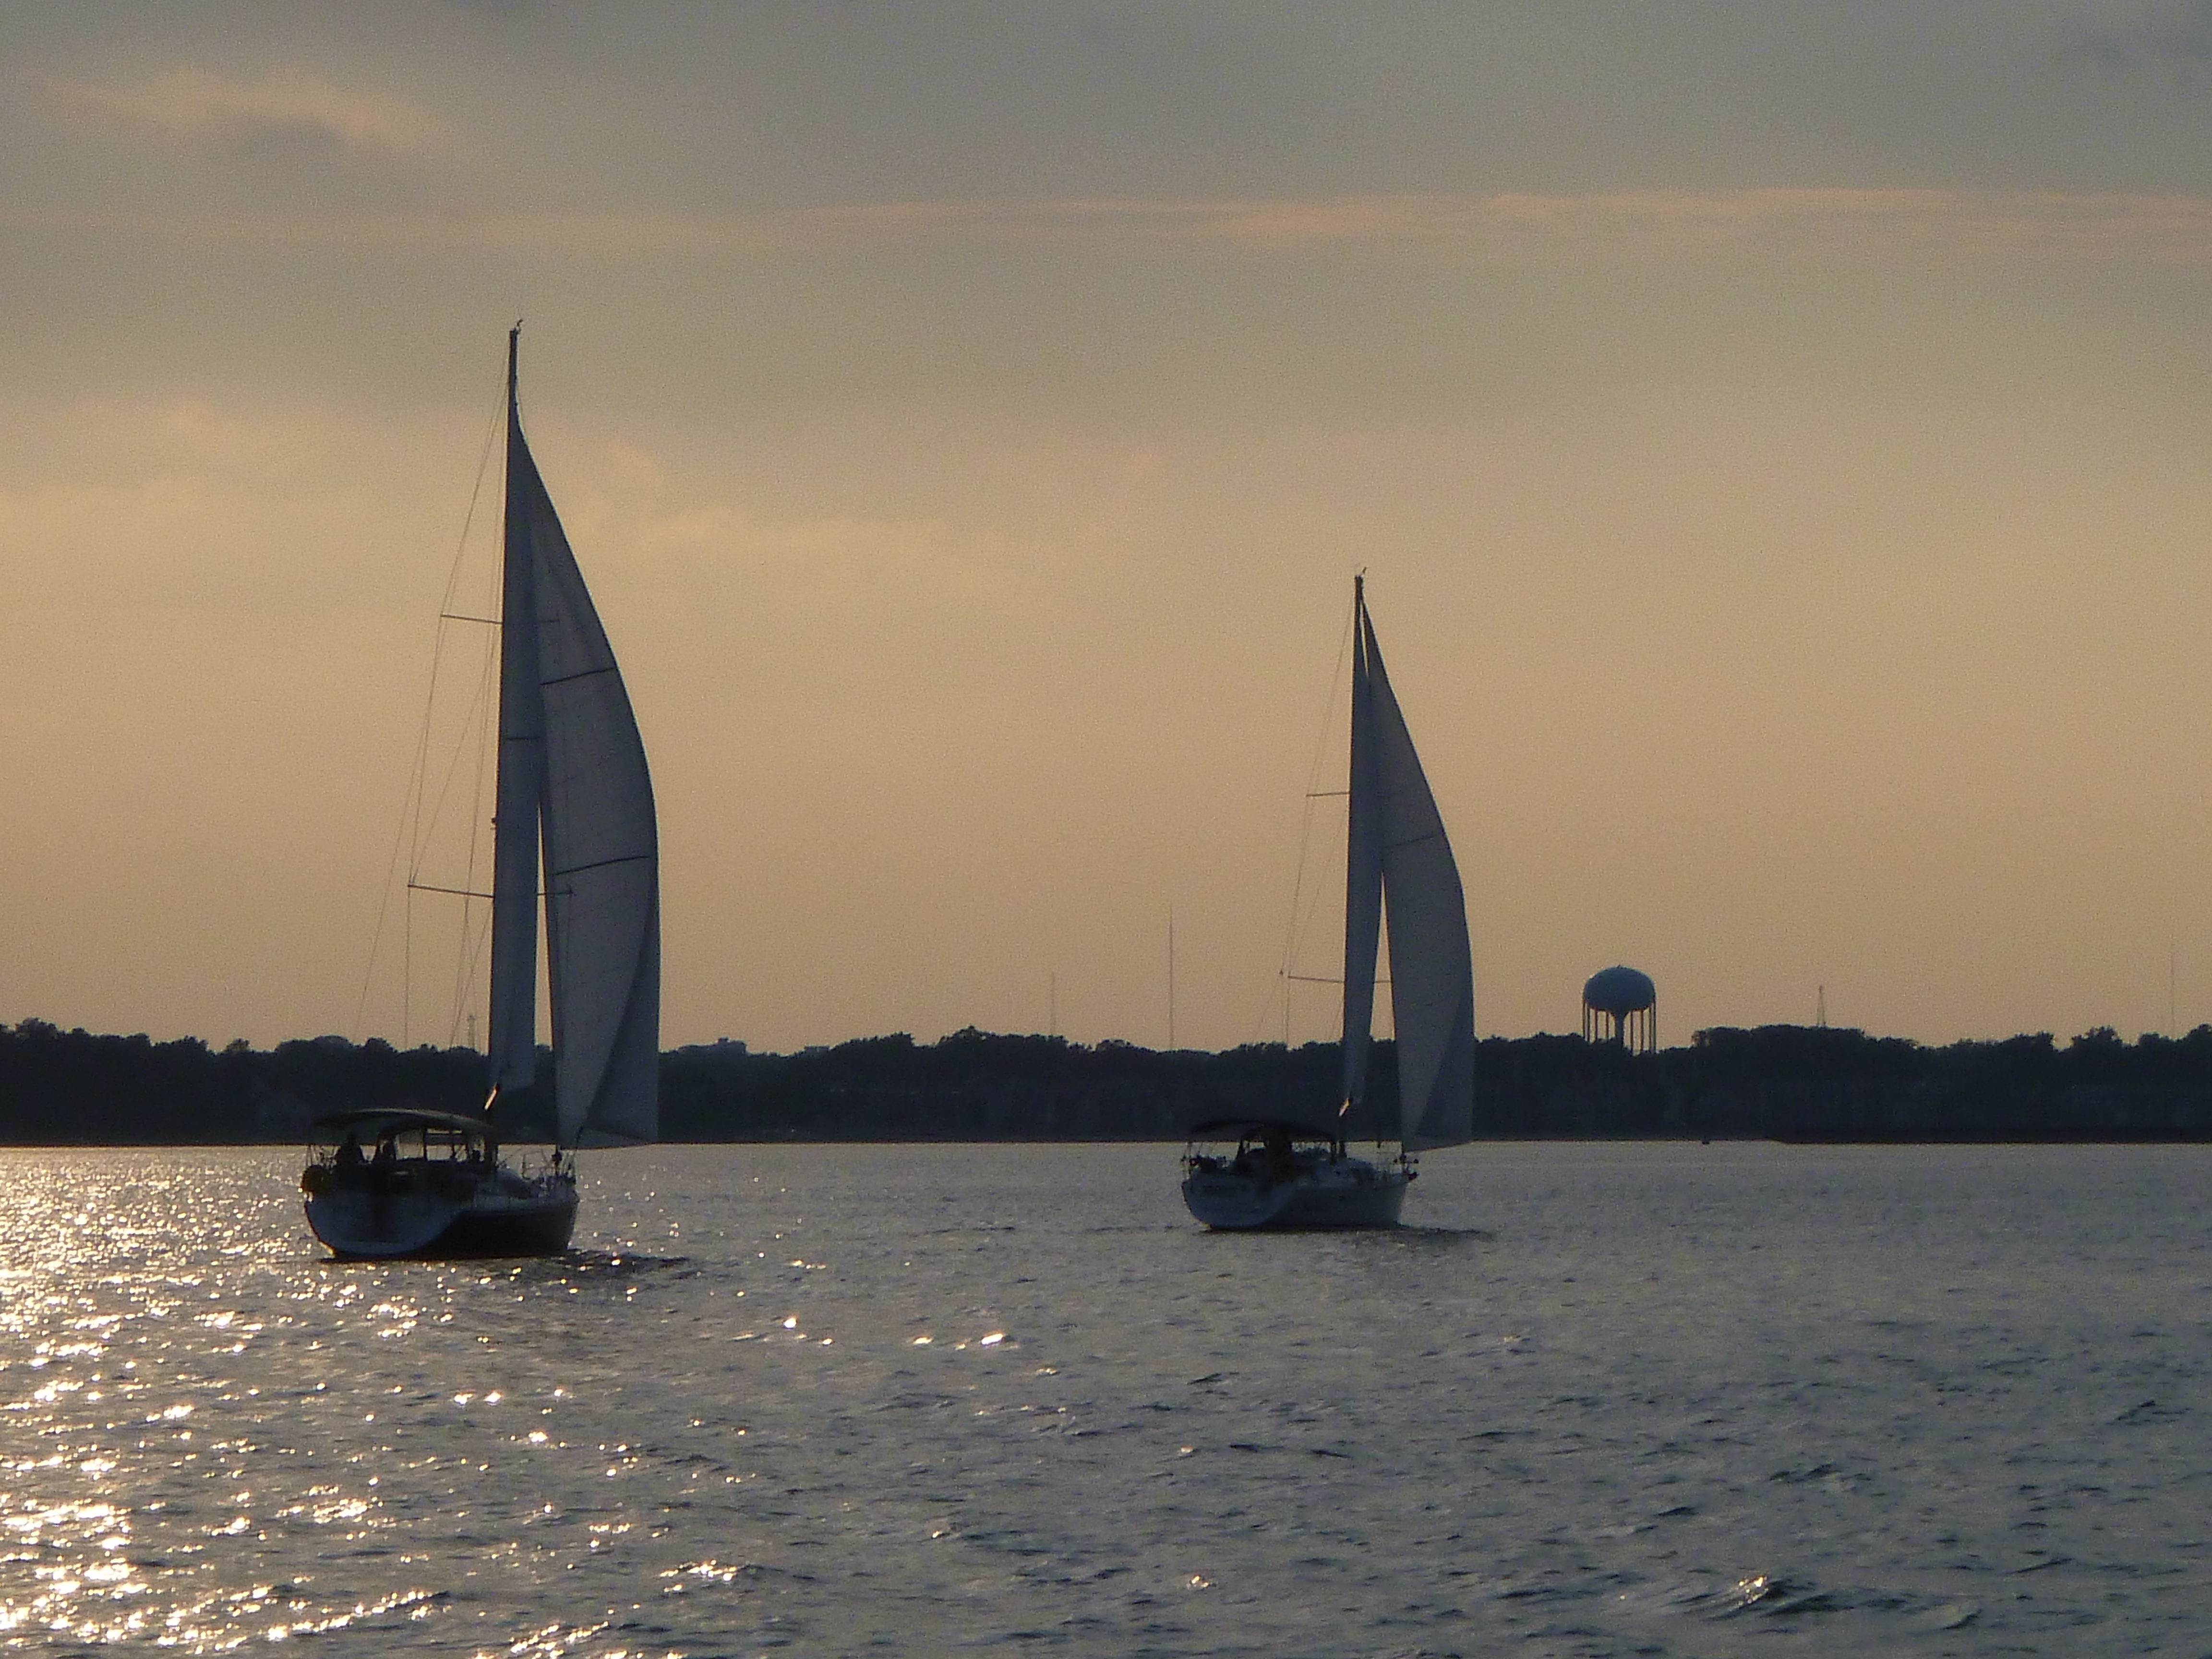 Heading Home both schooners in the sunset light